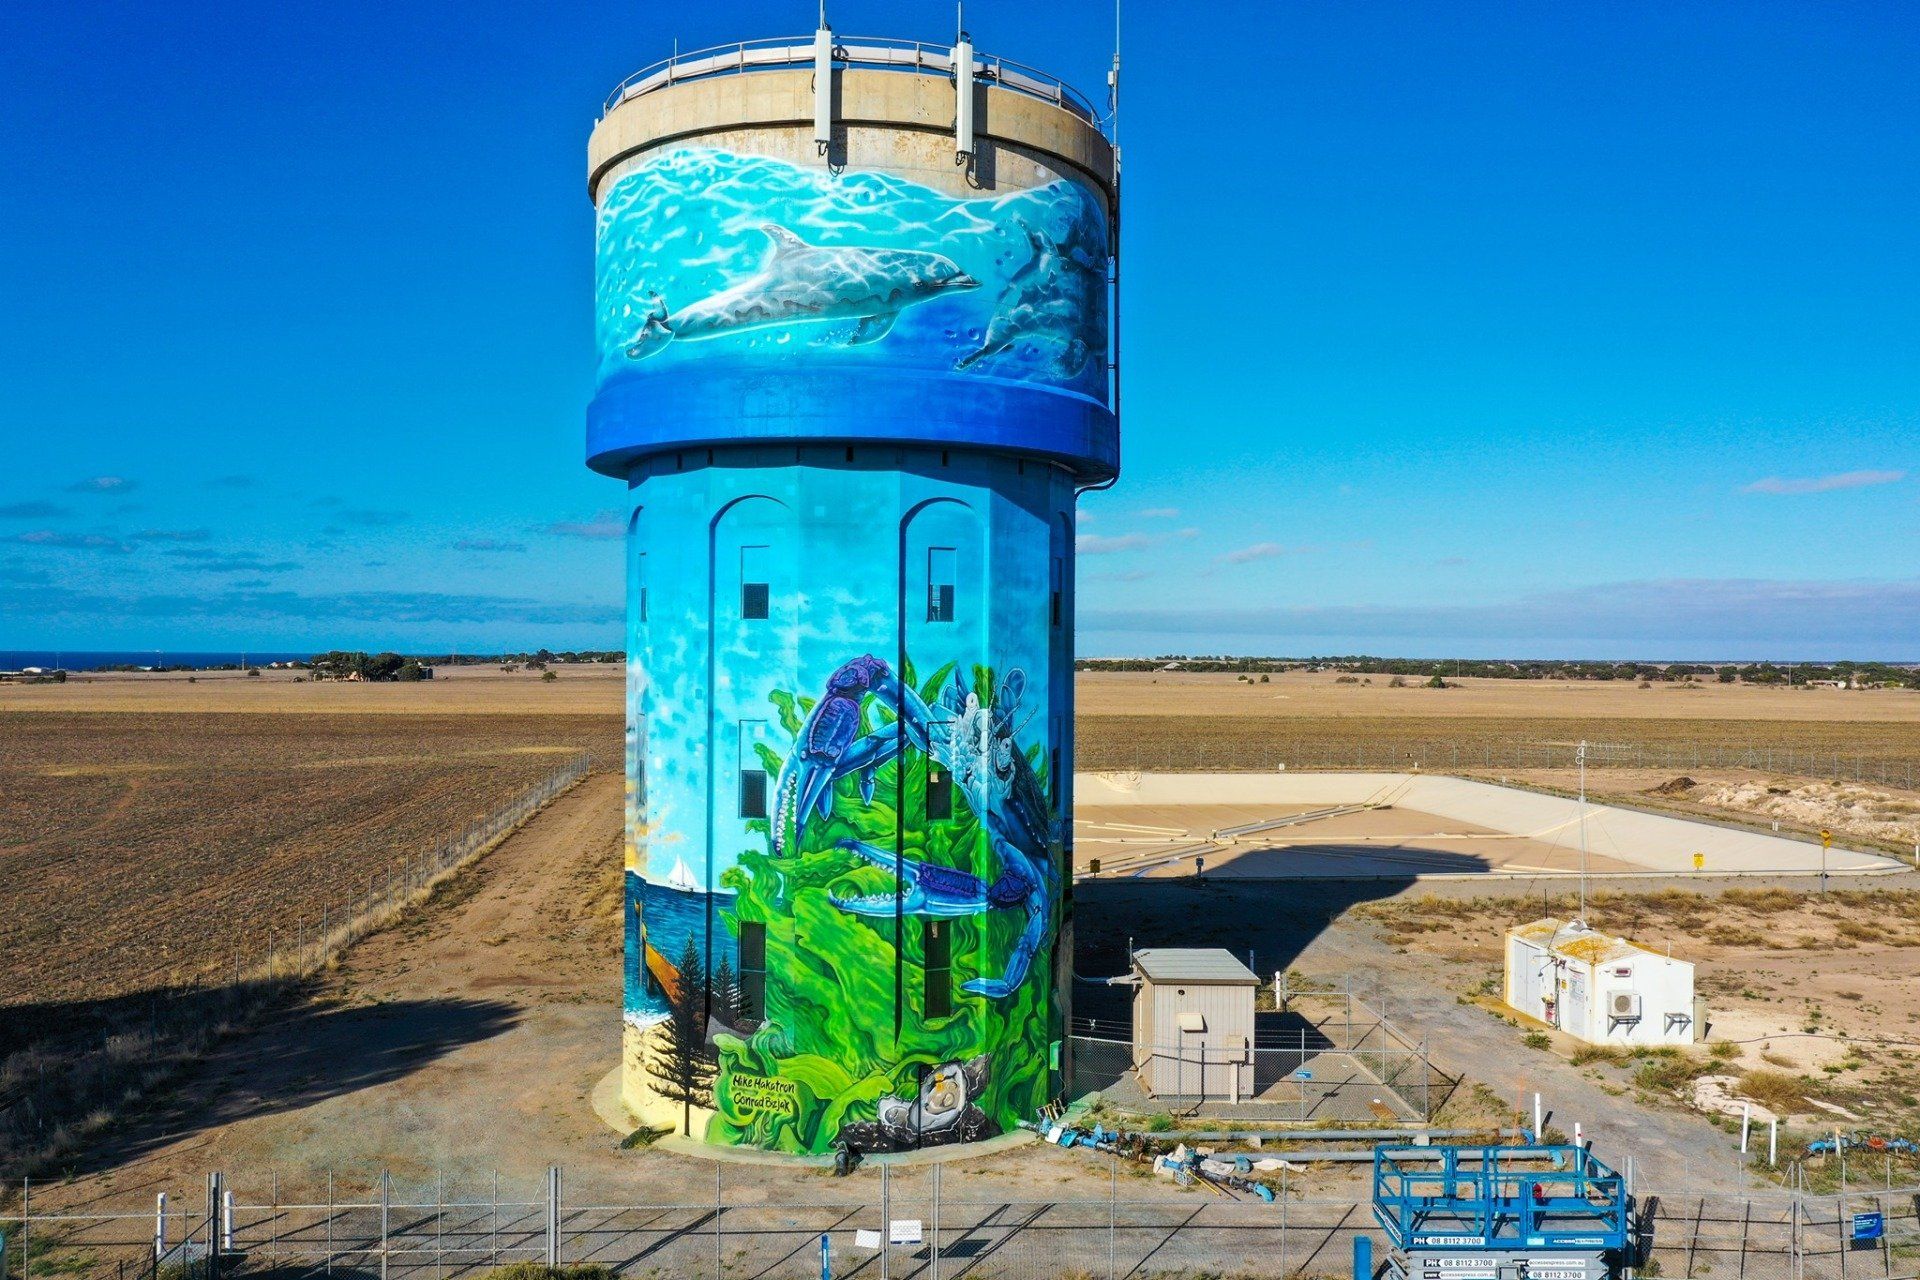 Stansbury Water Tower Art, Australian Silo Art trail